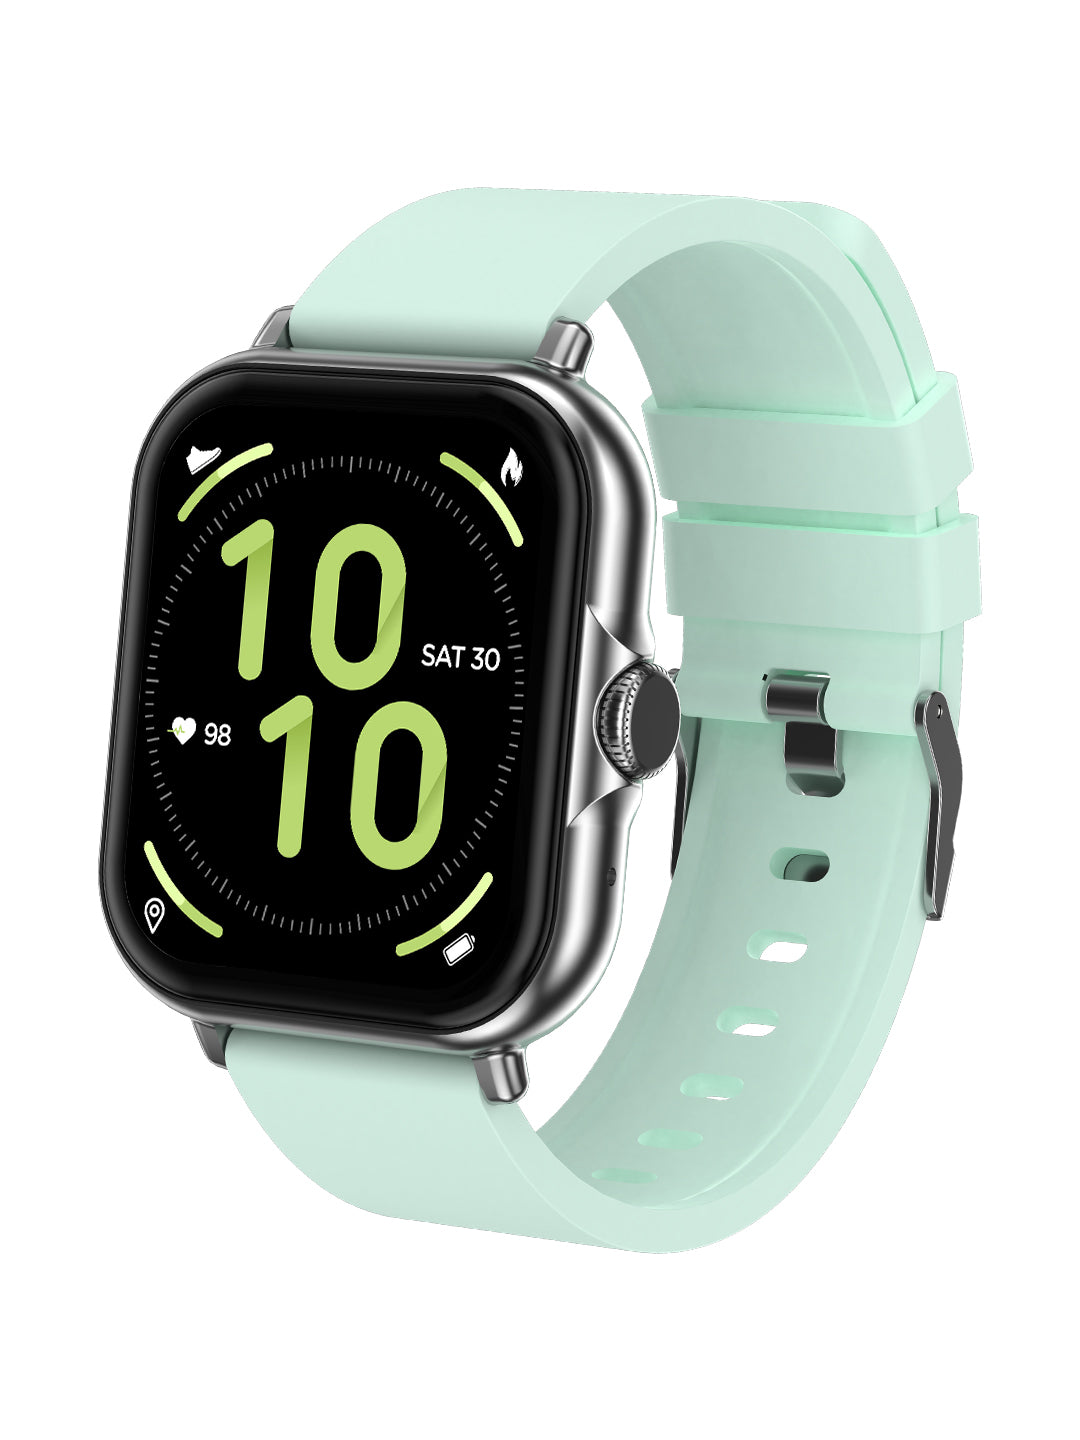 Garmin Venu 3S Advanced Health & Fitness Tracker Smart Watch - Pebble Gray  | eBay